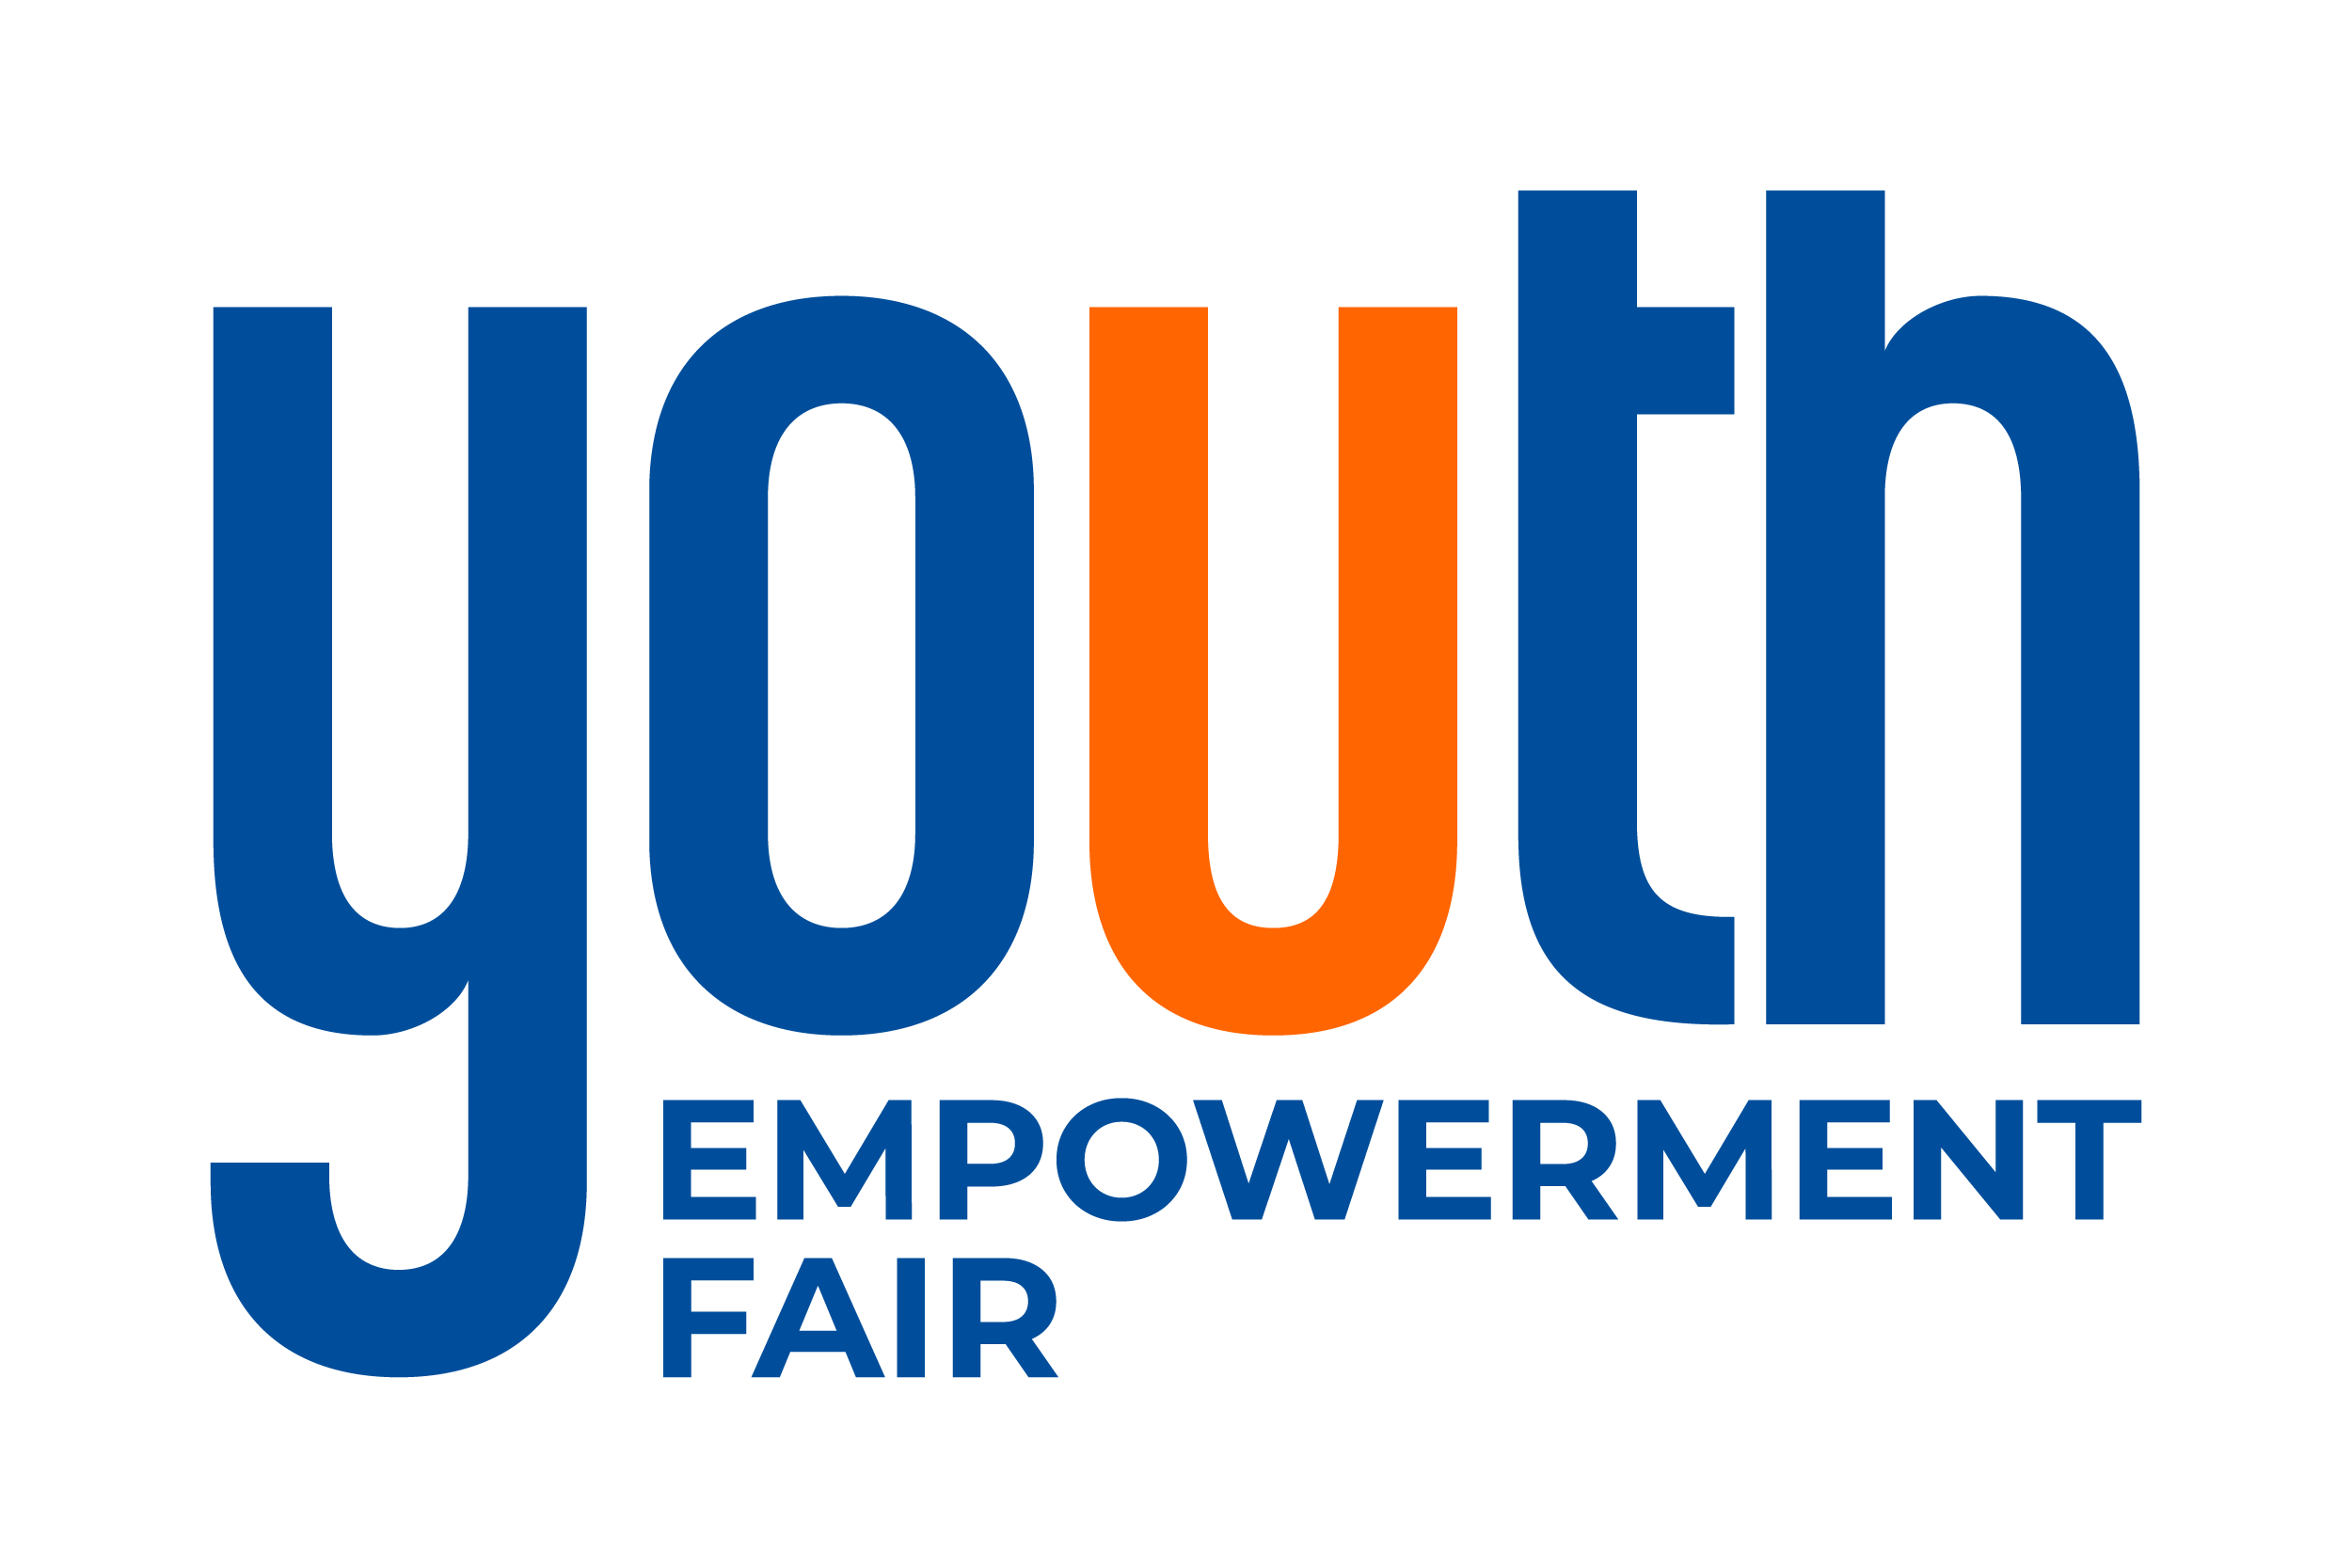 Youth empowerment fair